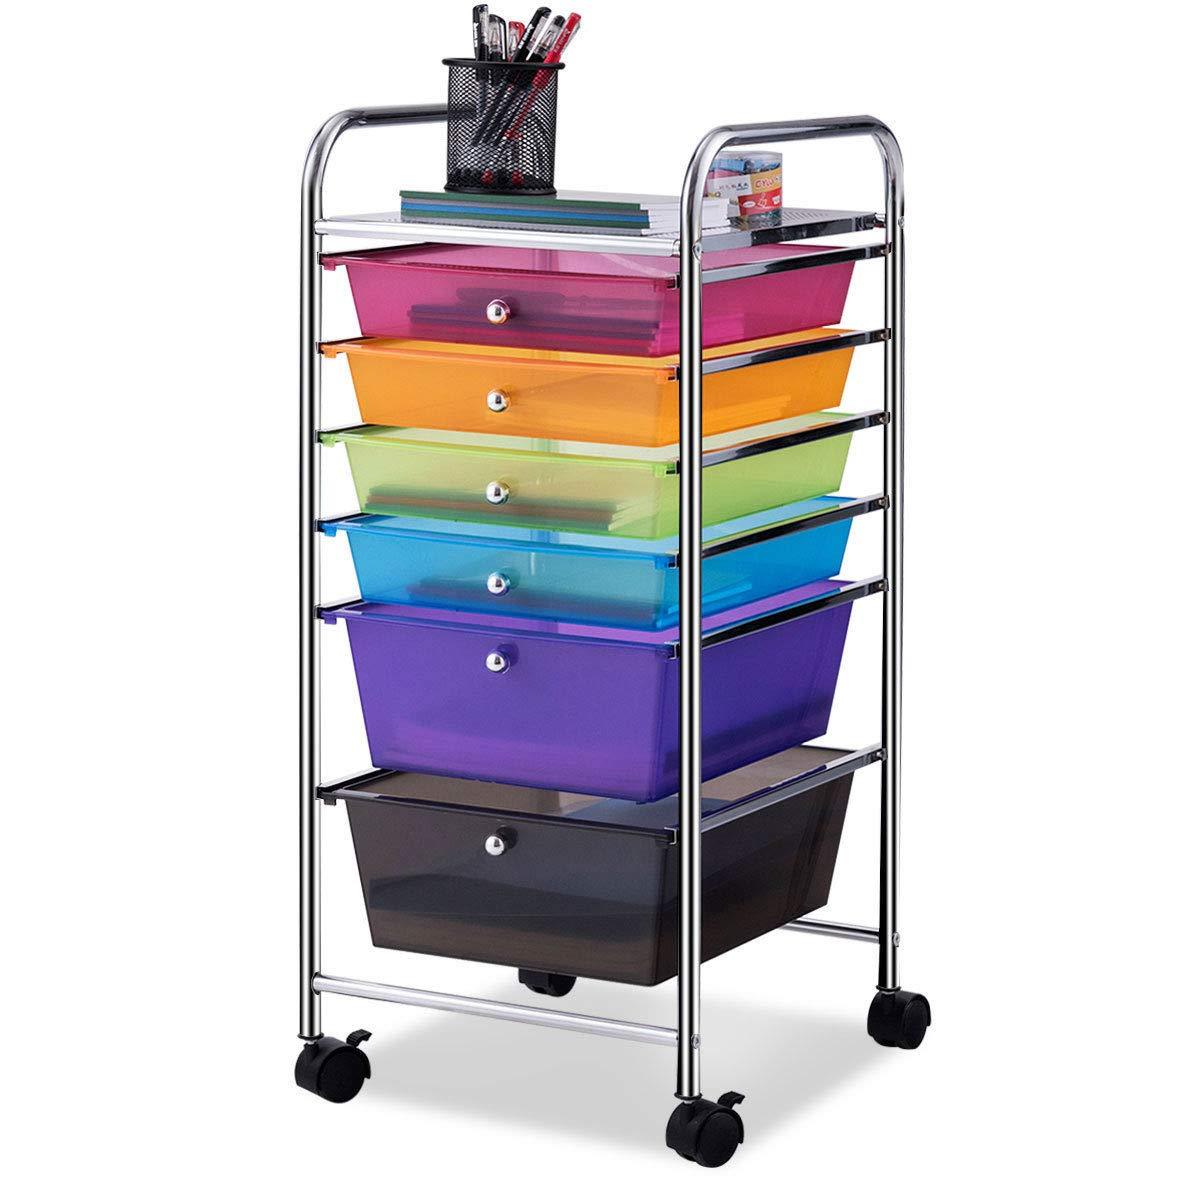 Giantex 6 Storage Drawer Cart Rolling Organizer Cart for Tools